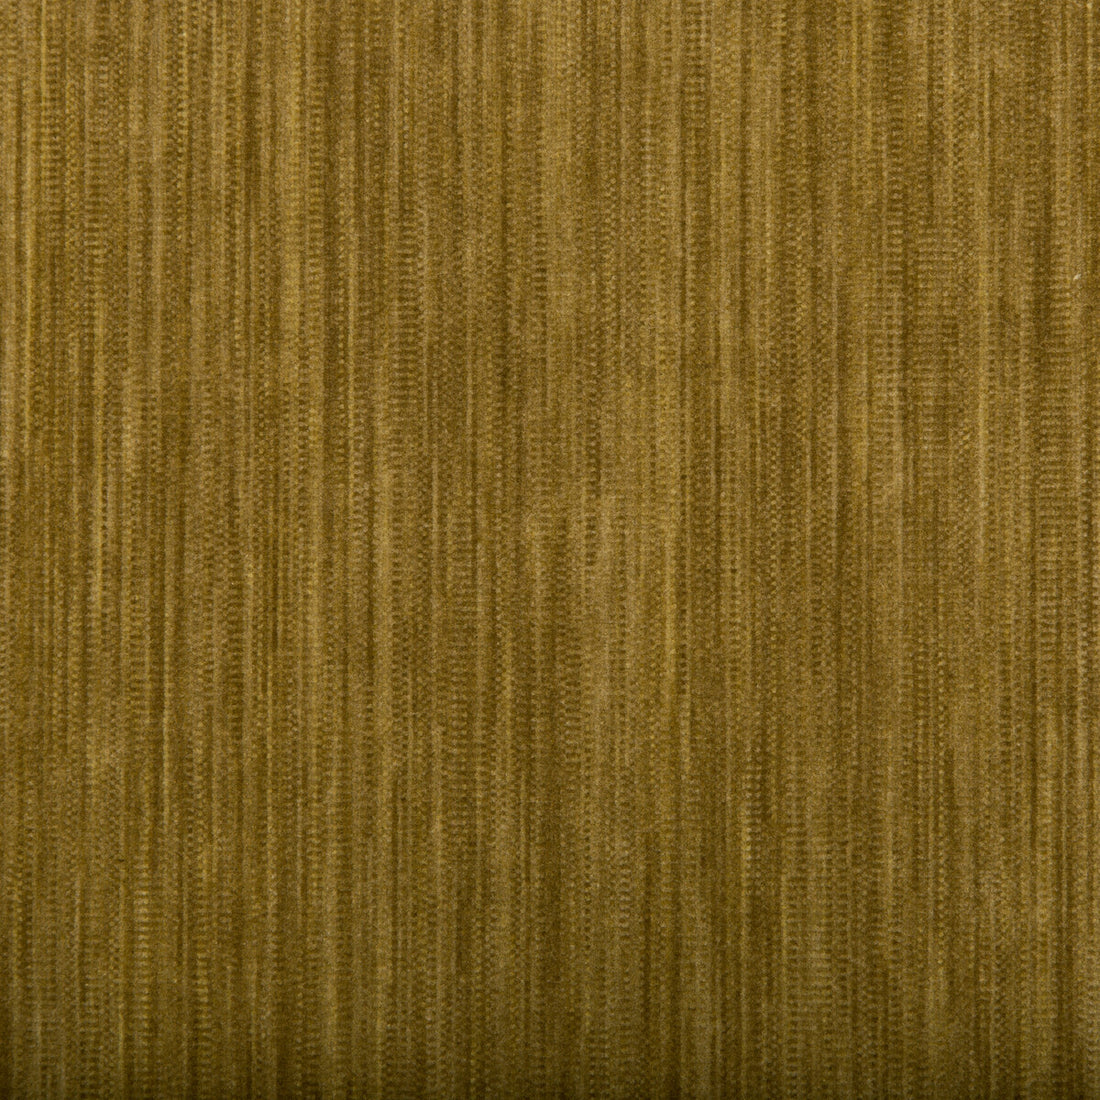 Barnwell Velvet fabric in sand color - pattern 2020180.164.0 - by Lee Jofa in the Barnwell Velvet collection